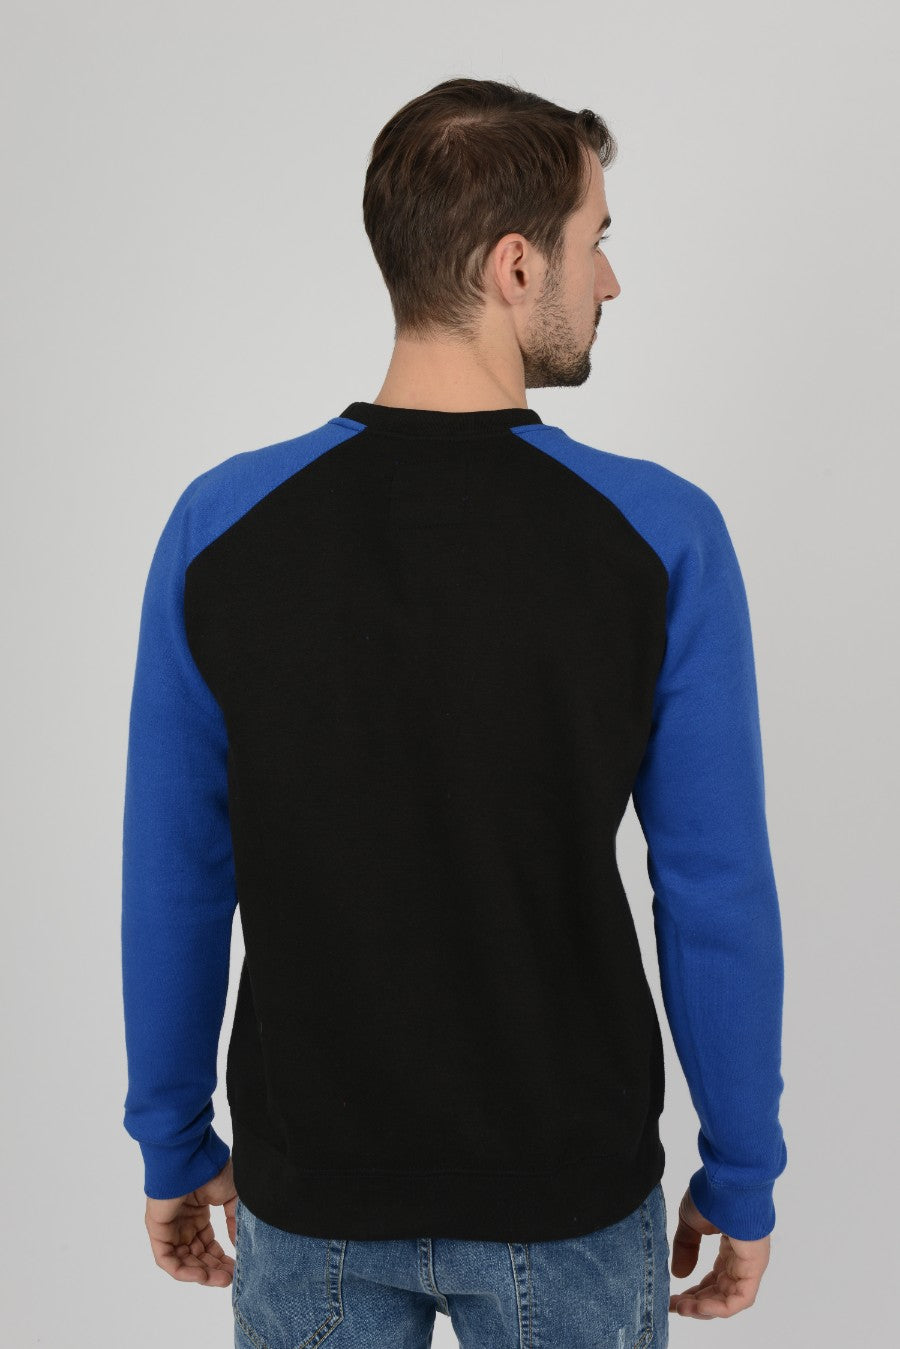 mens black and royal blue colour jumper sweatshirt top